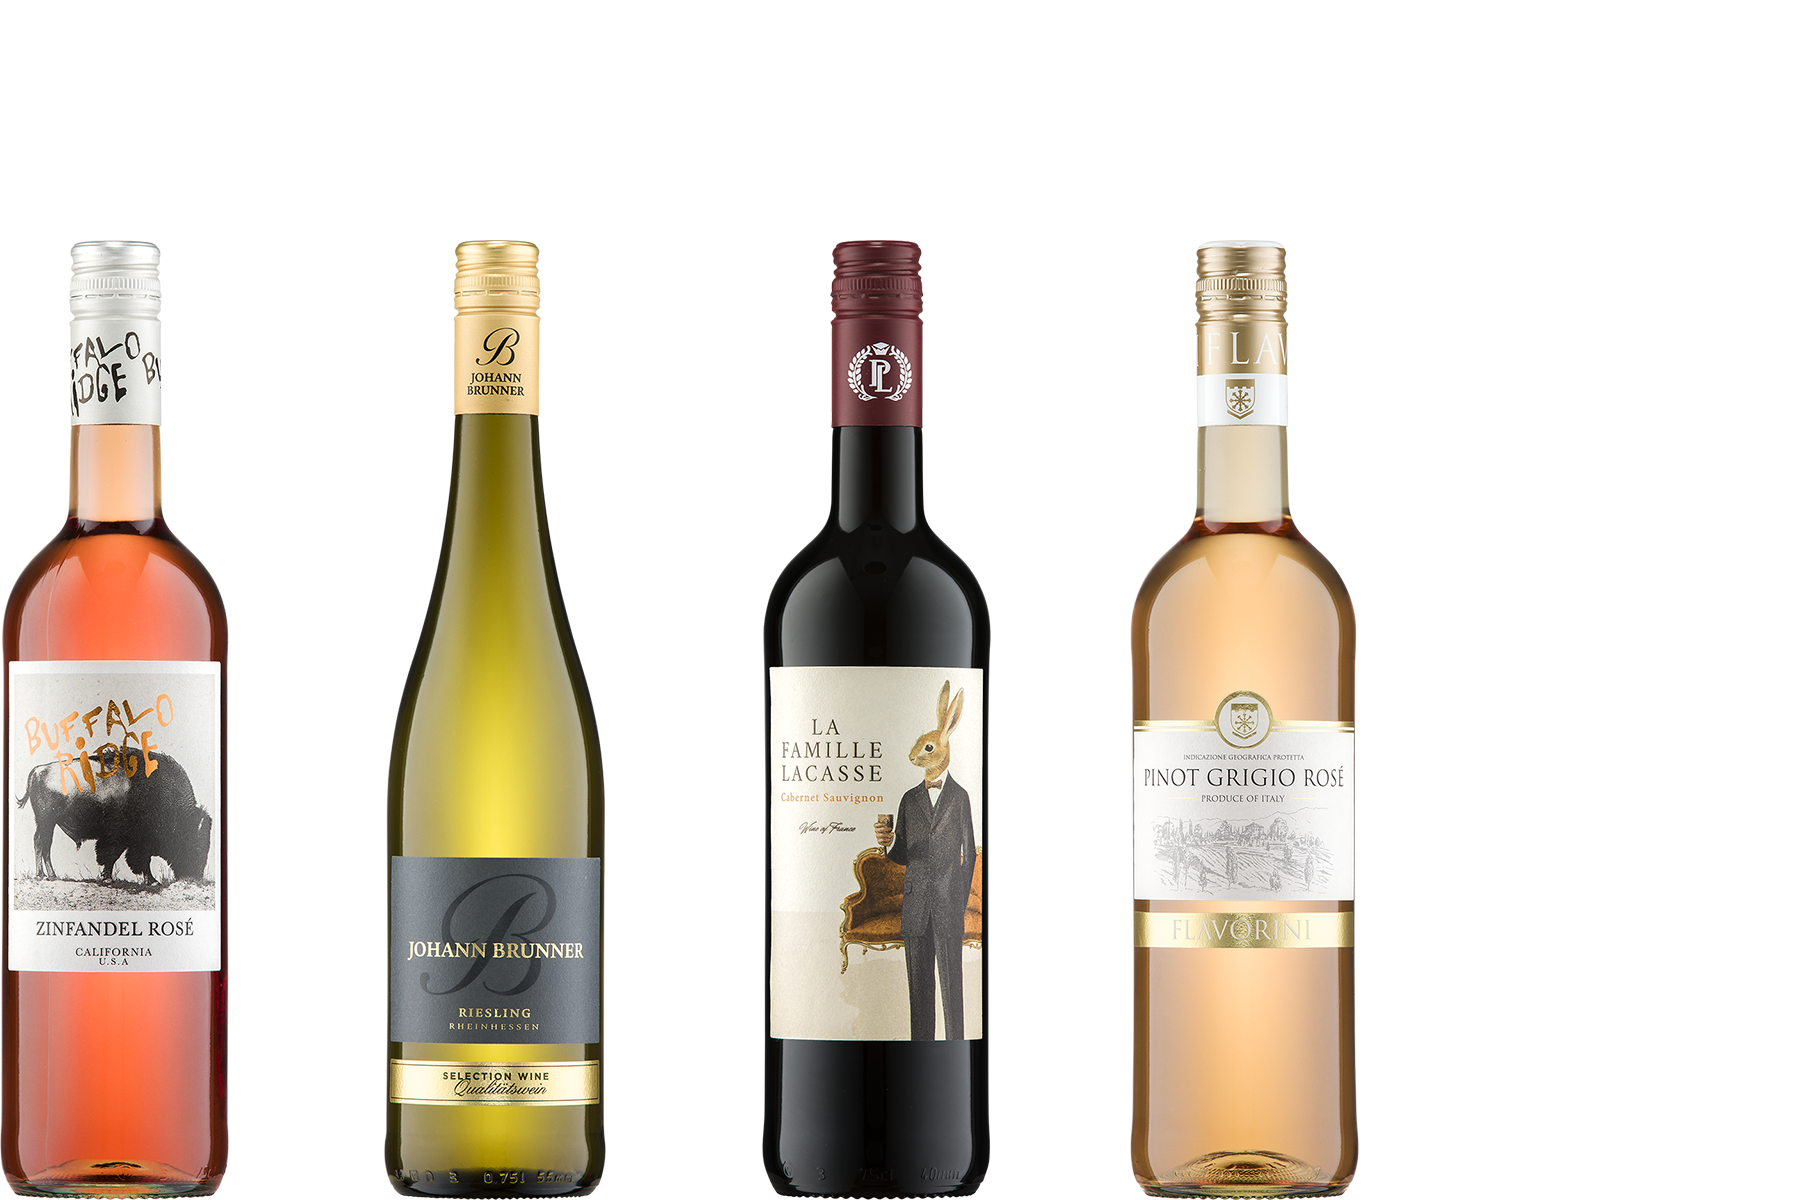 four bottles of wine: Buffalo Ridge Zinfandel Rosé, Johann Brunner Riesling, La Famille La Casse Cabernet Souvignon, Flavorini Pino Grigio Rosé